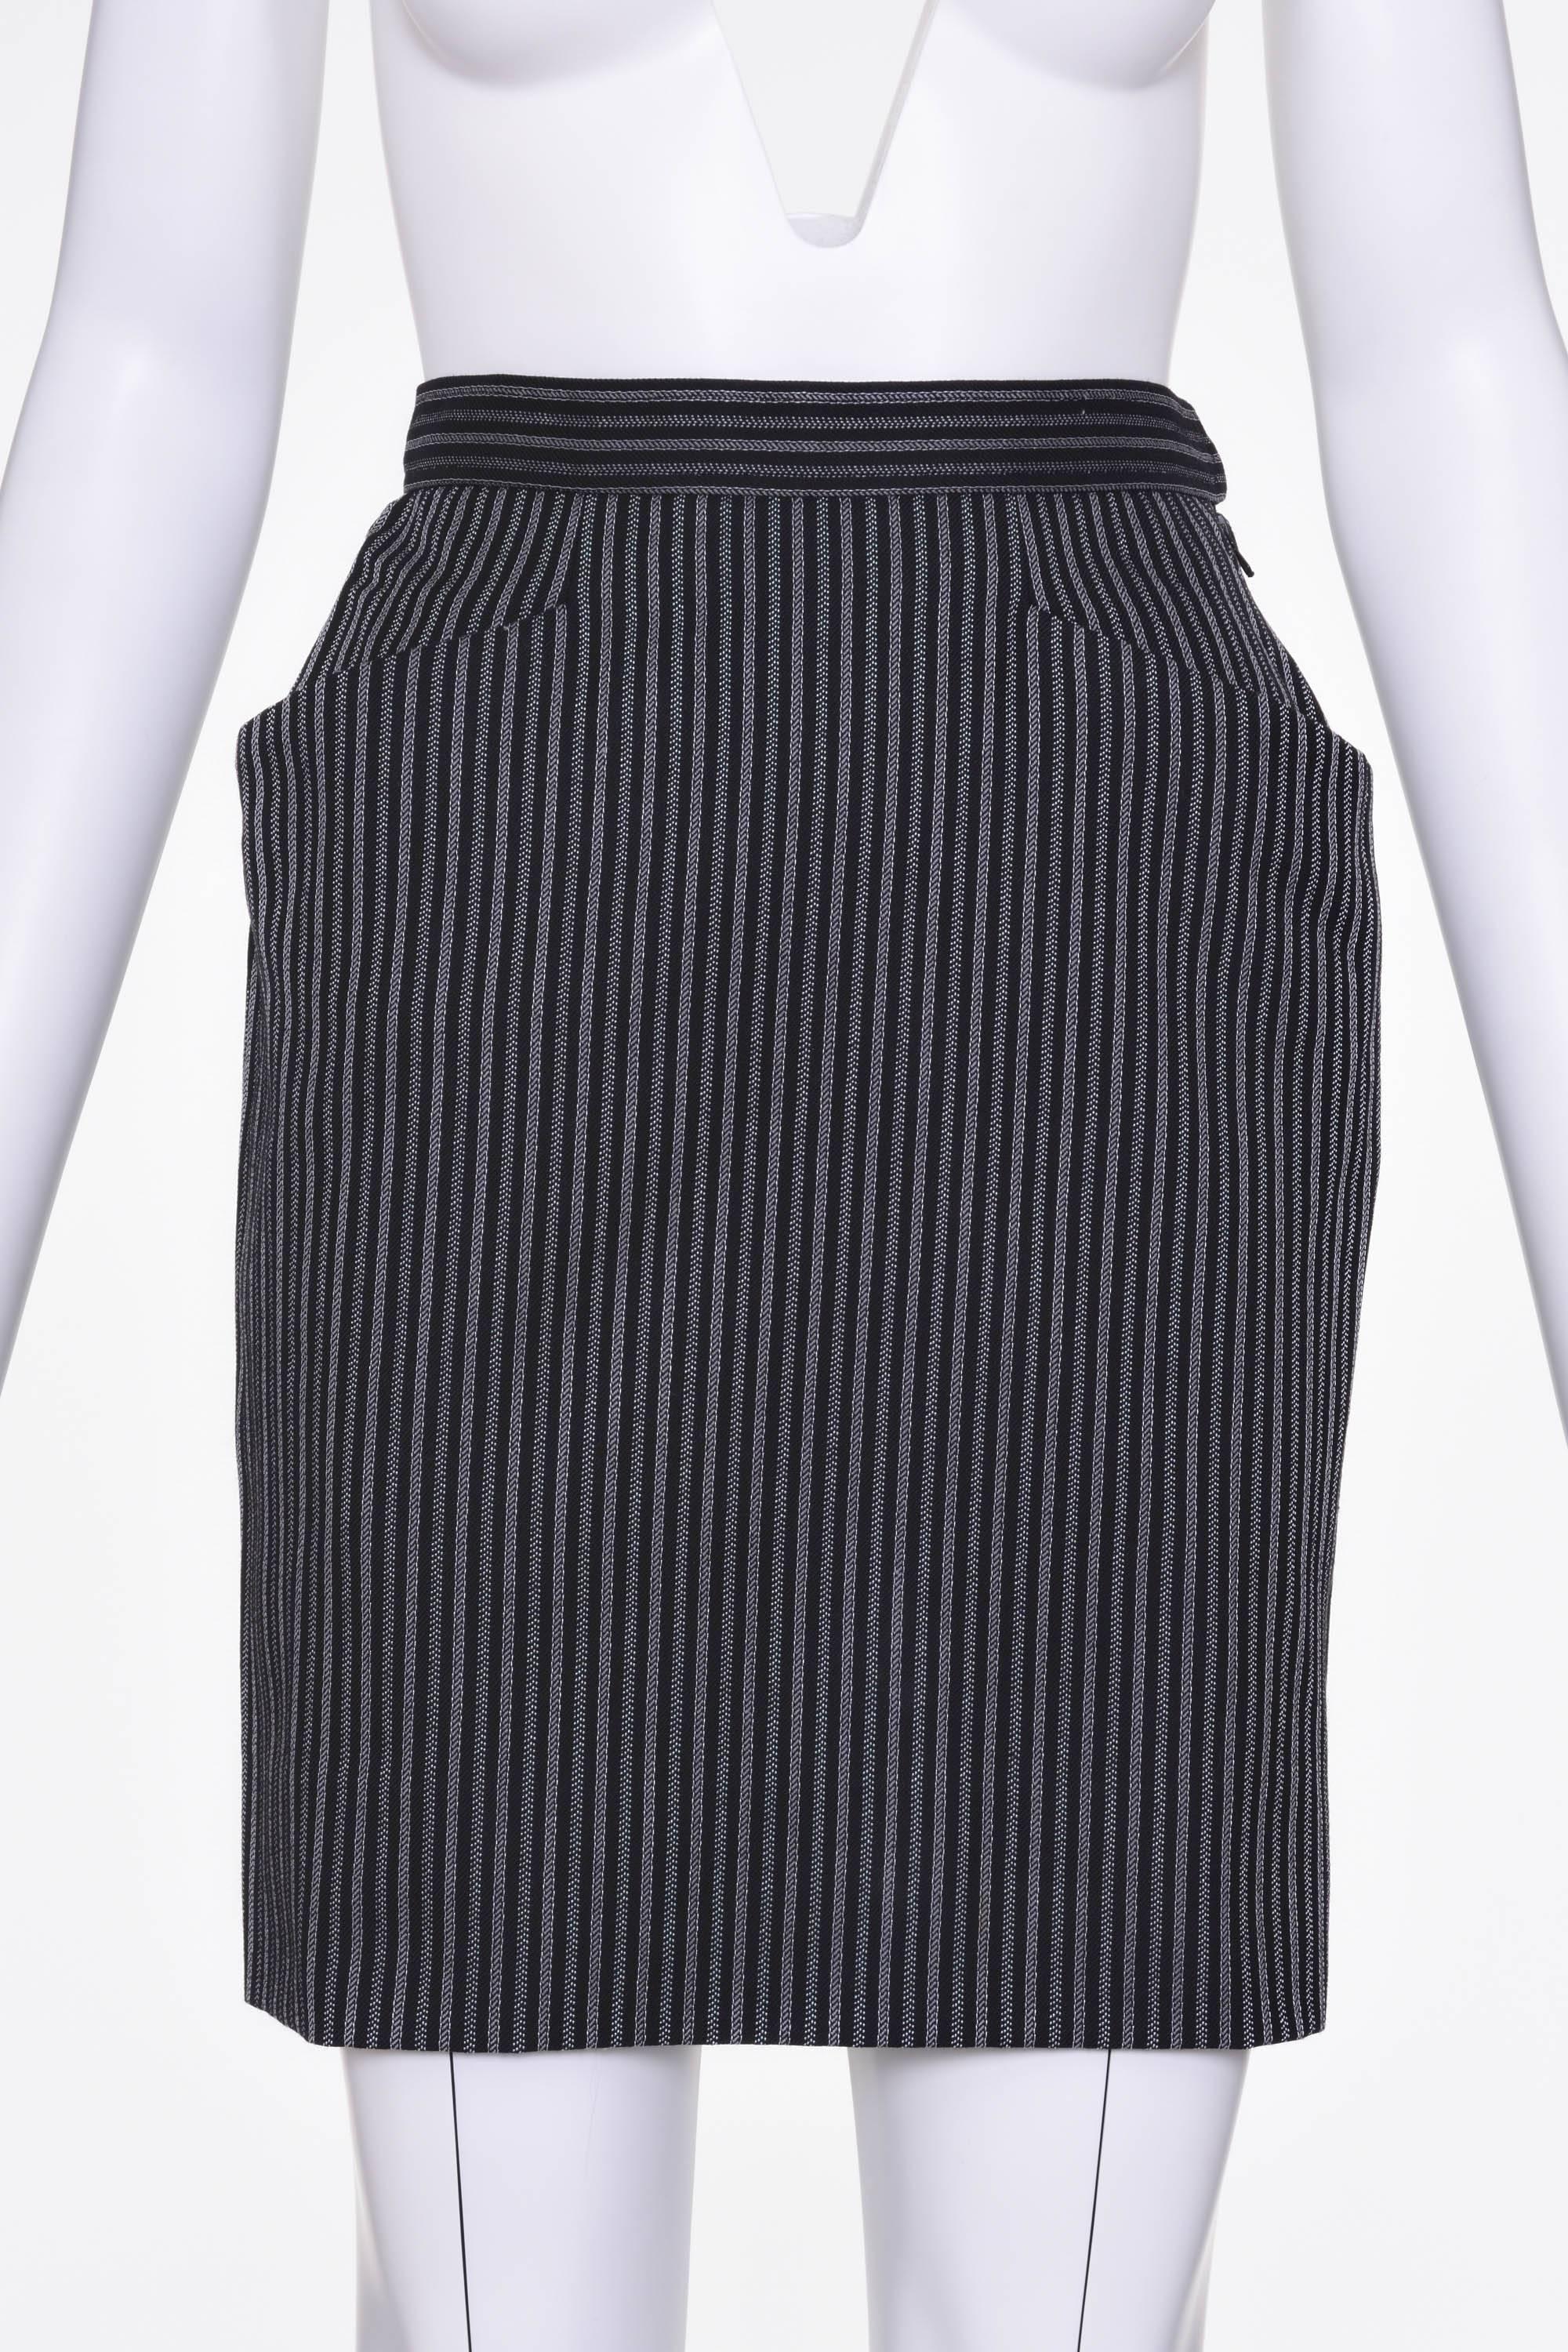 Black 1980s YVES SAiNT LAURENT Rive Gauche Pinstriped Wool Suit Skirt  For Sale